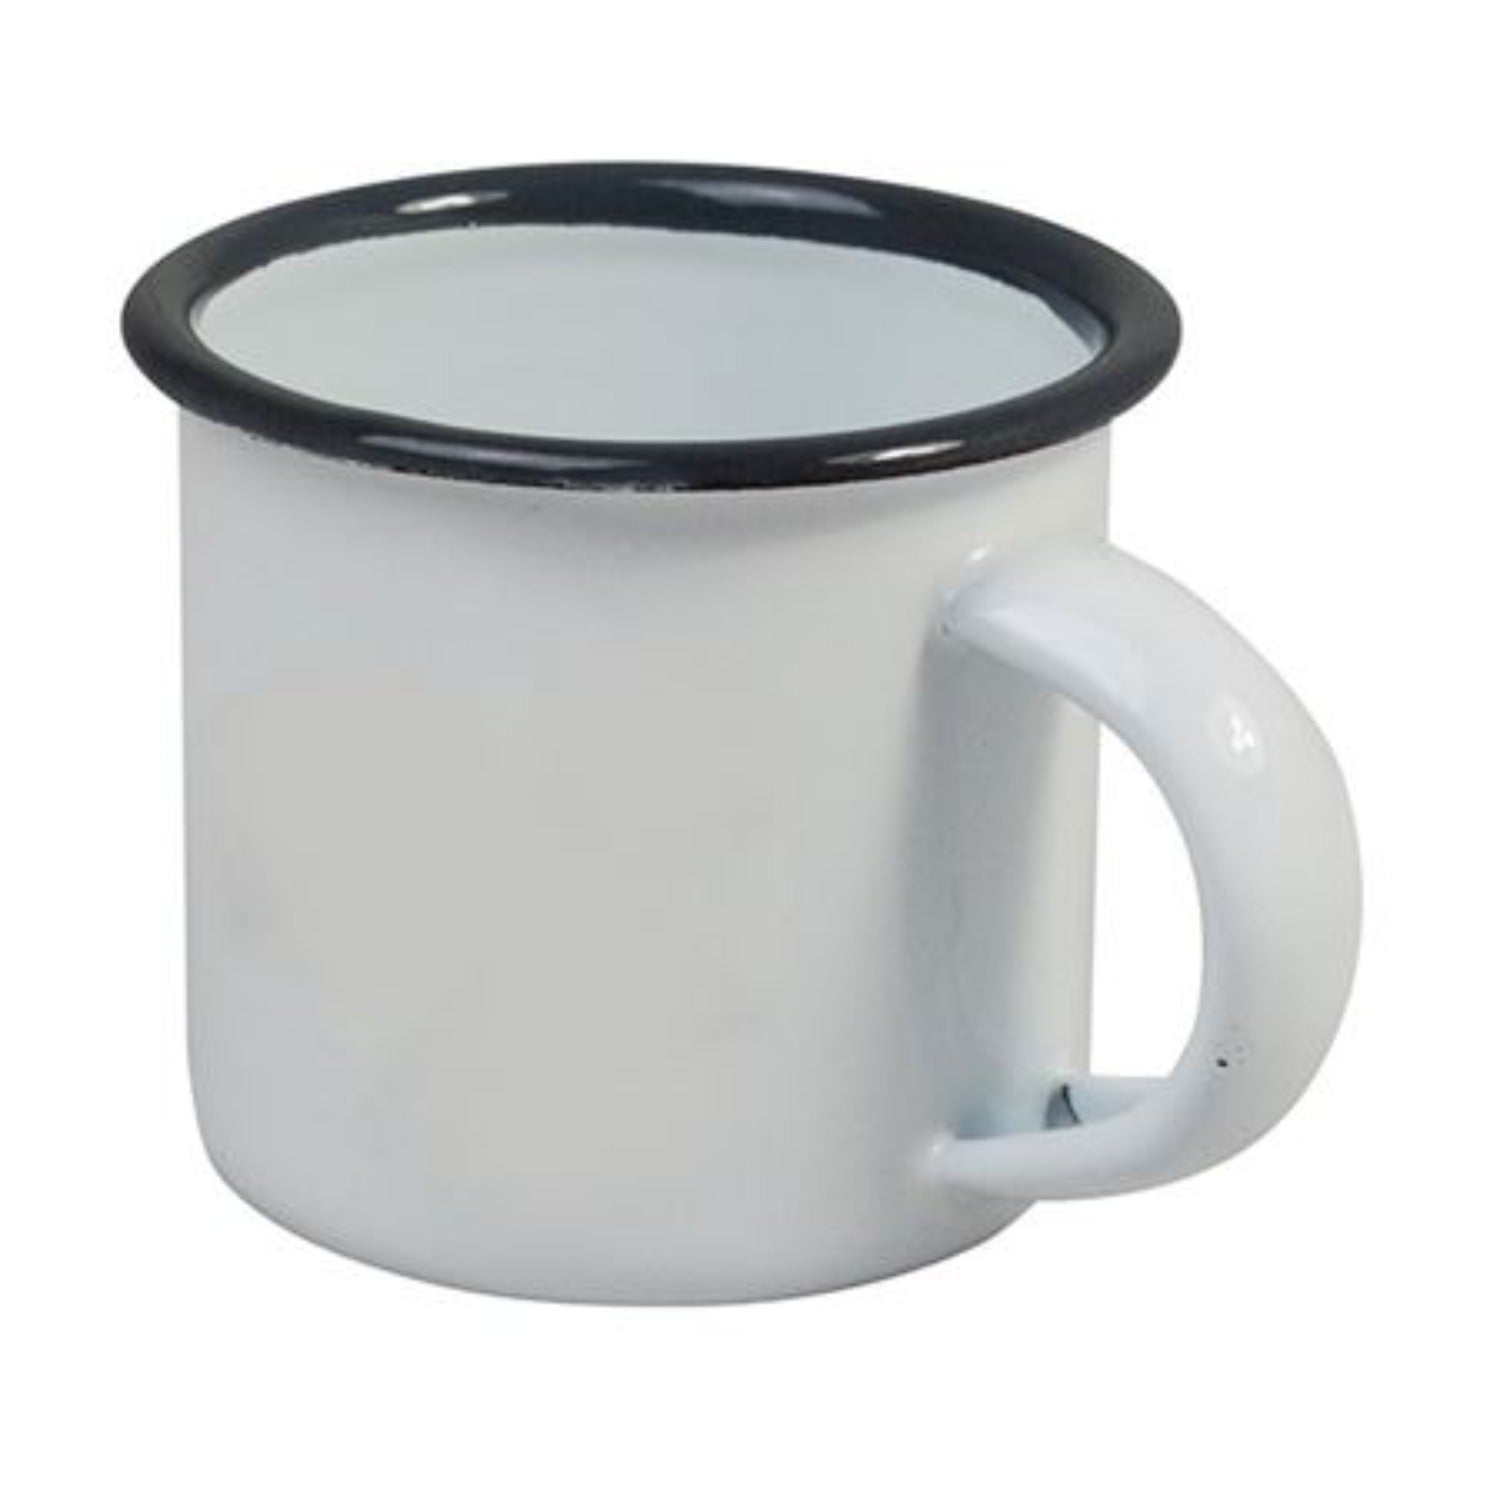 enamel-espresso-cup-white-with-black-rim-10cl/3.5oz 